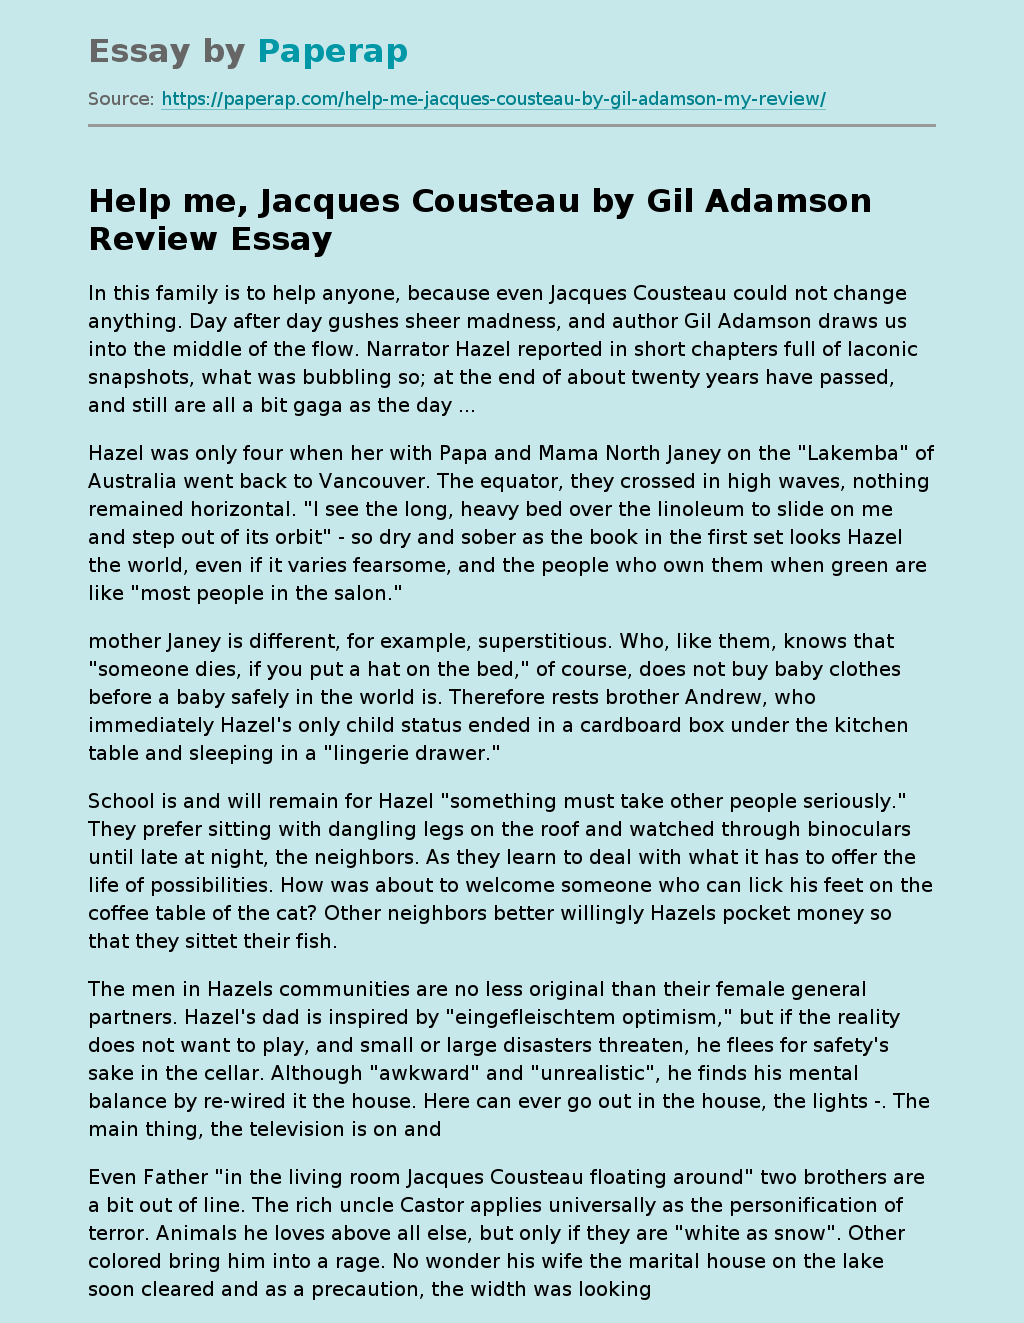 "Help me, Jacques Cousteau" by Gil Adamson